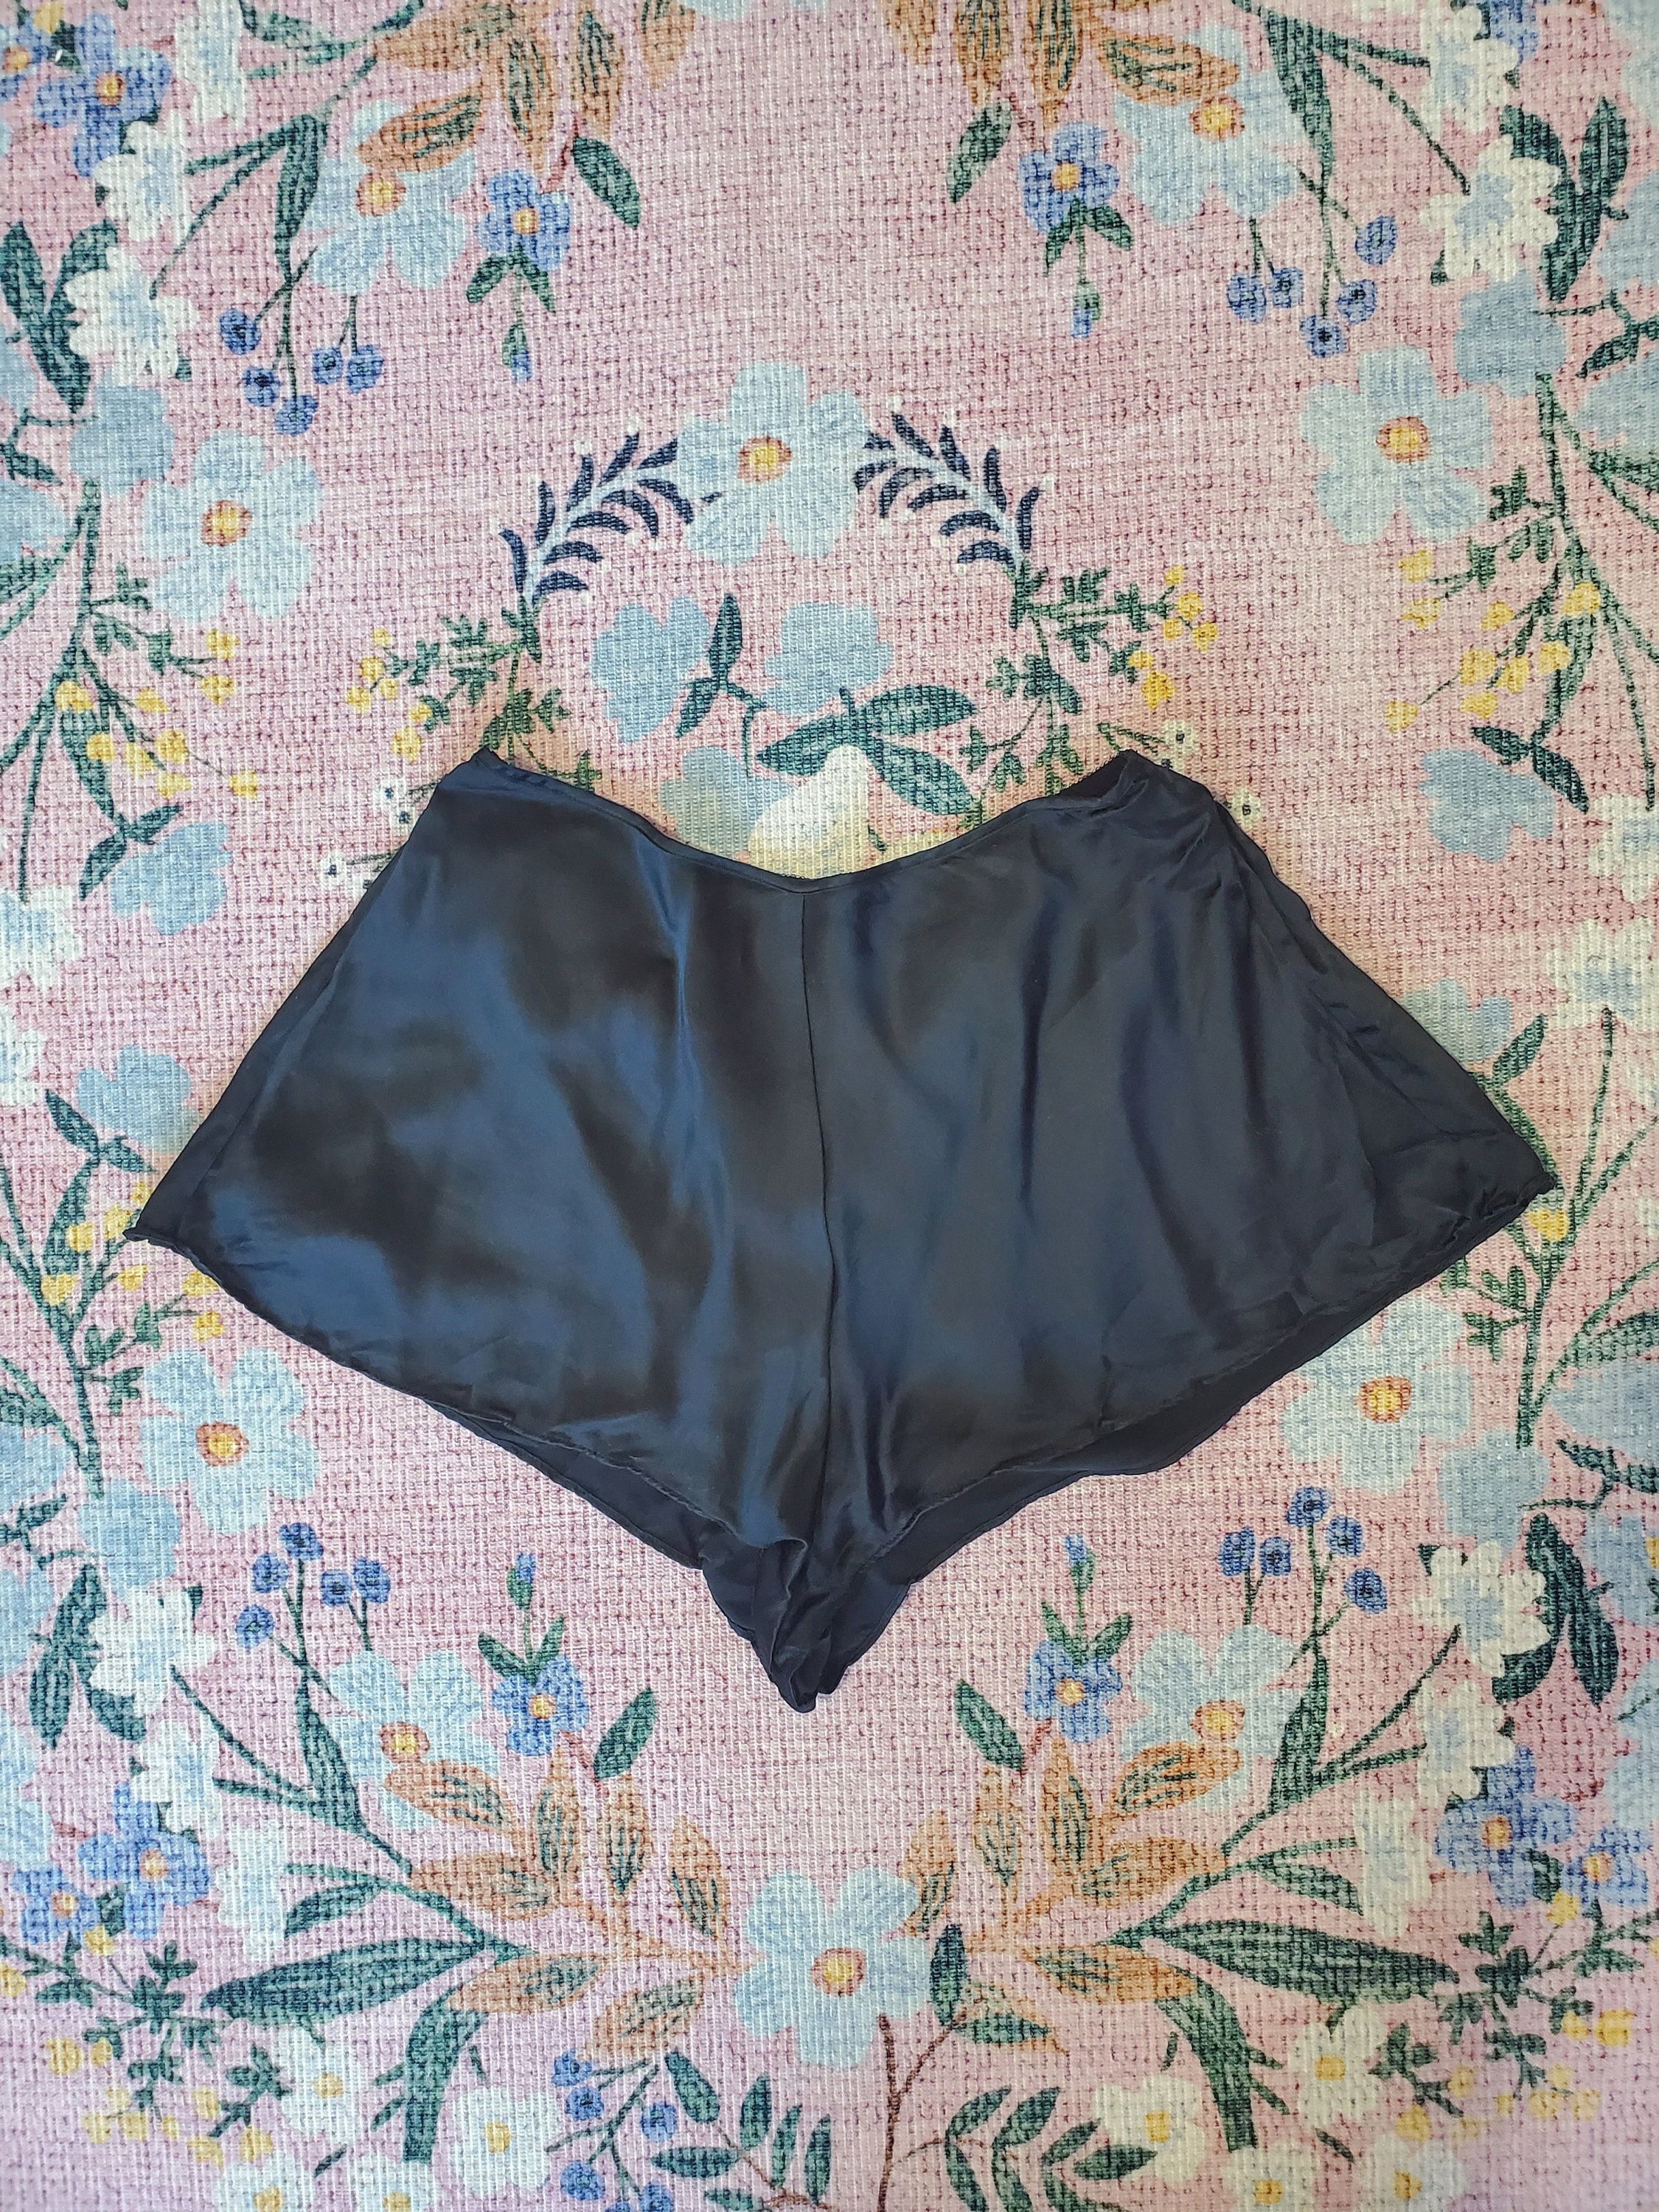 True Vintage Victoria Secret Silky Satin Panty Size Small